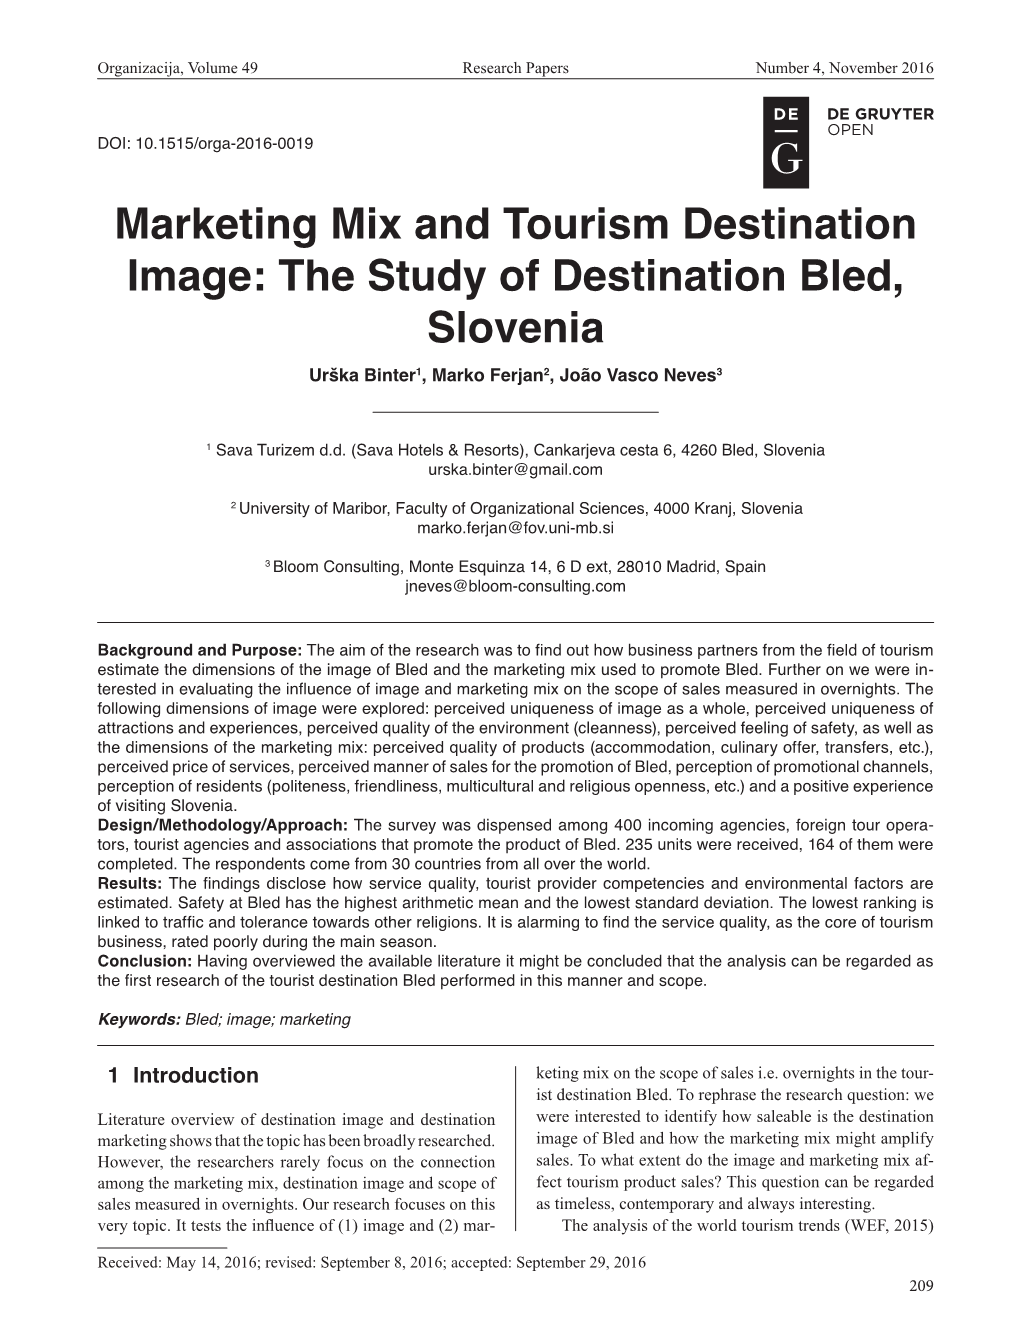 The Study of Destination Bled, Slovenia Urška Binter1, Marko Ferjan2, João Vasco Neves3